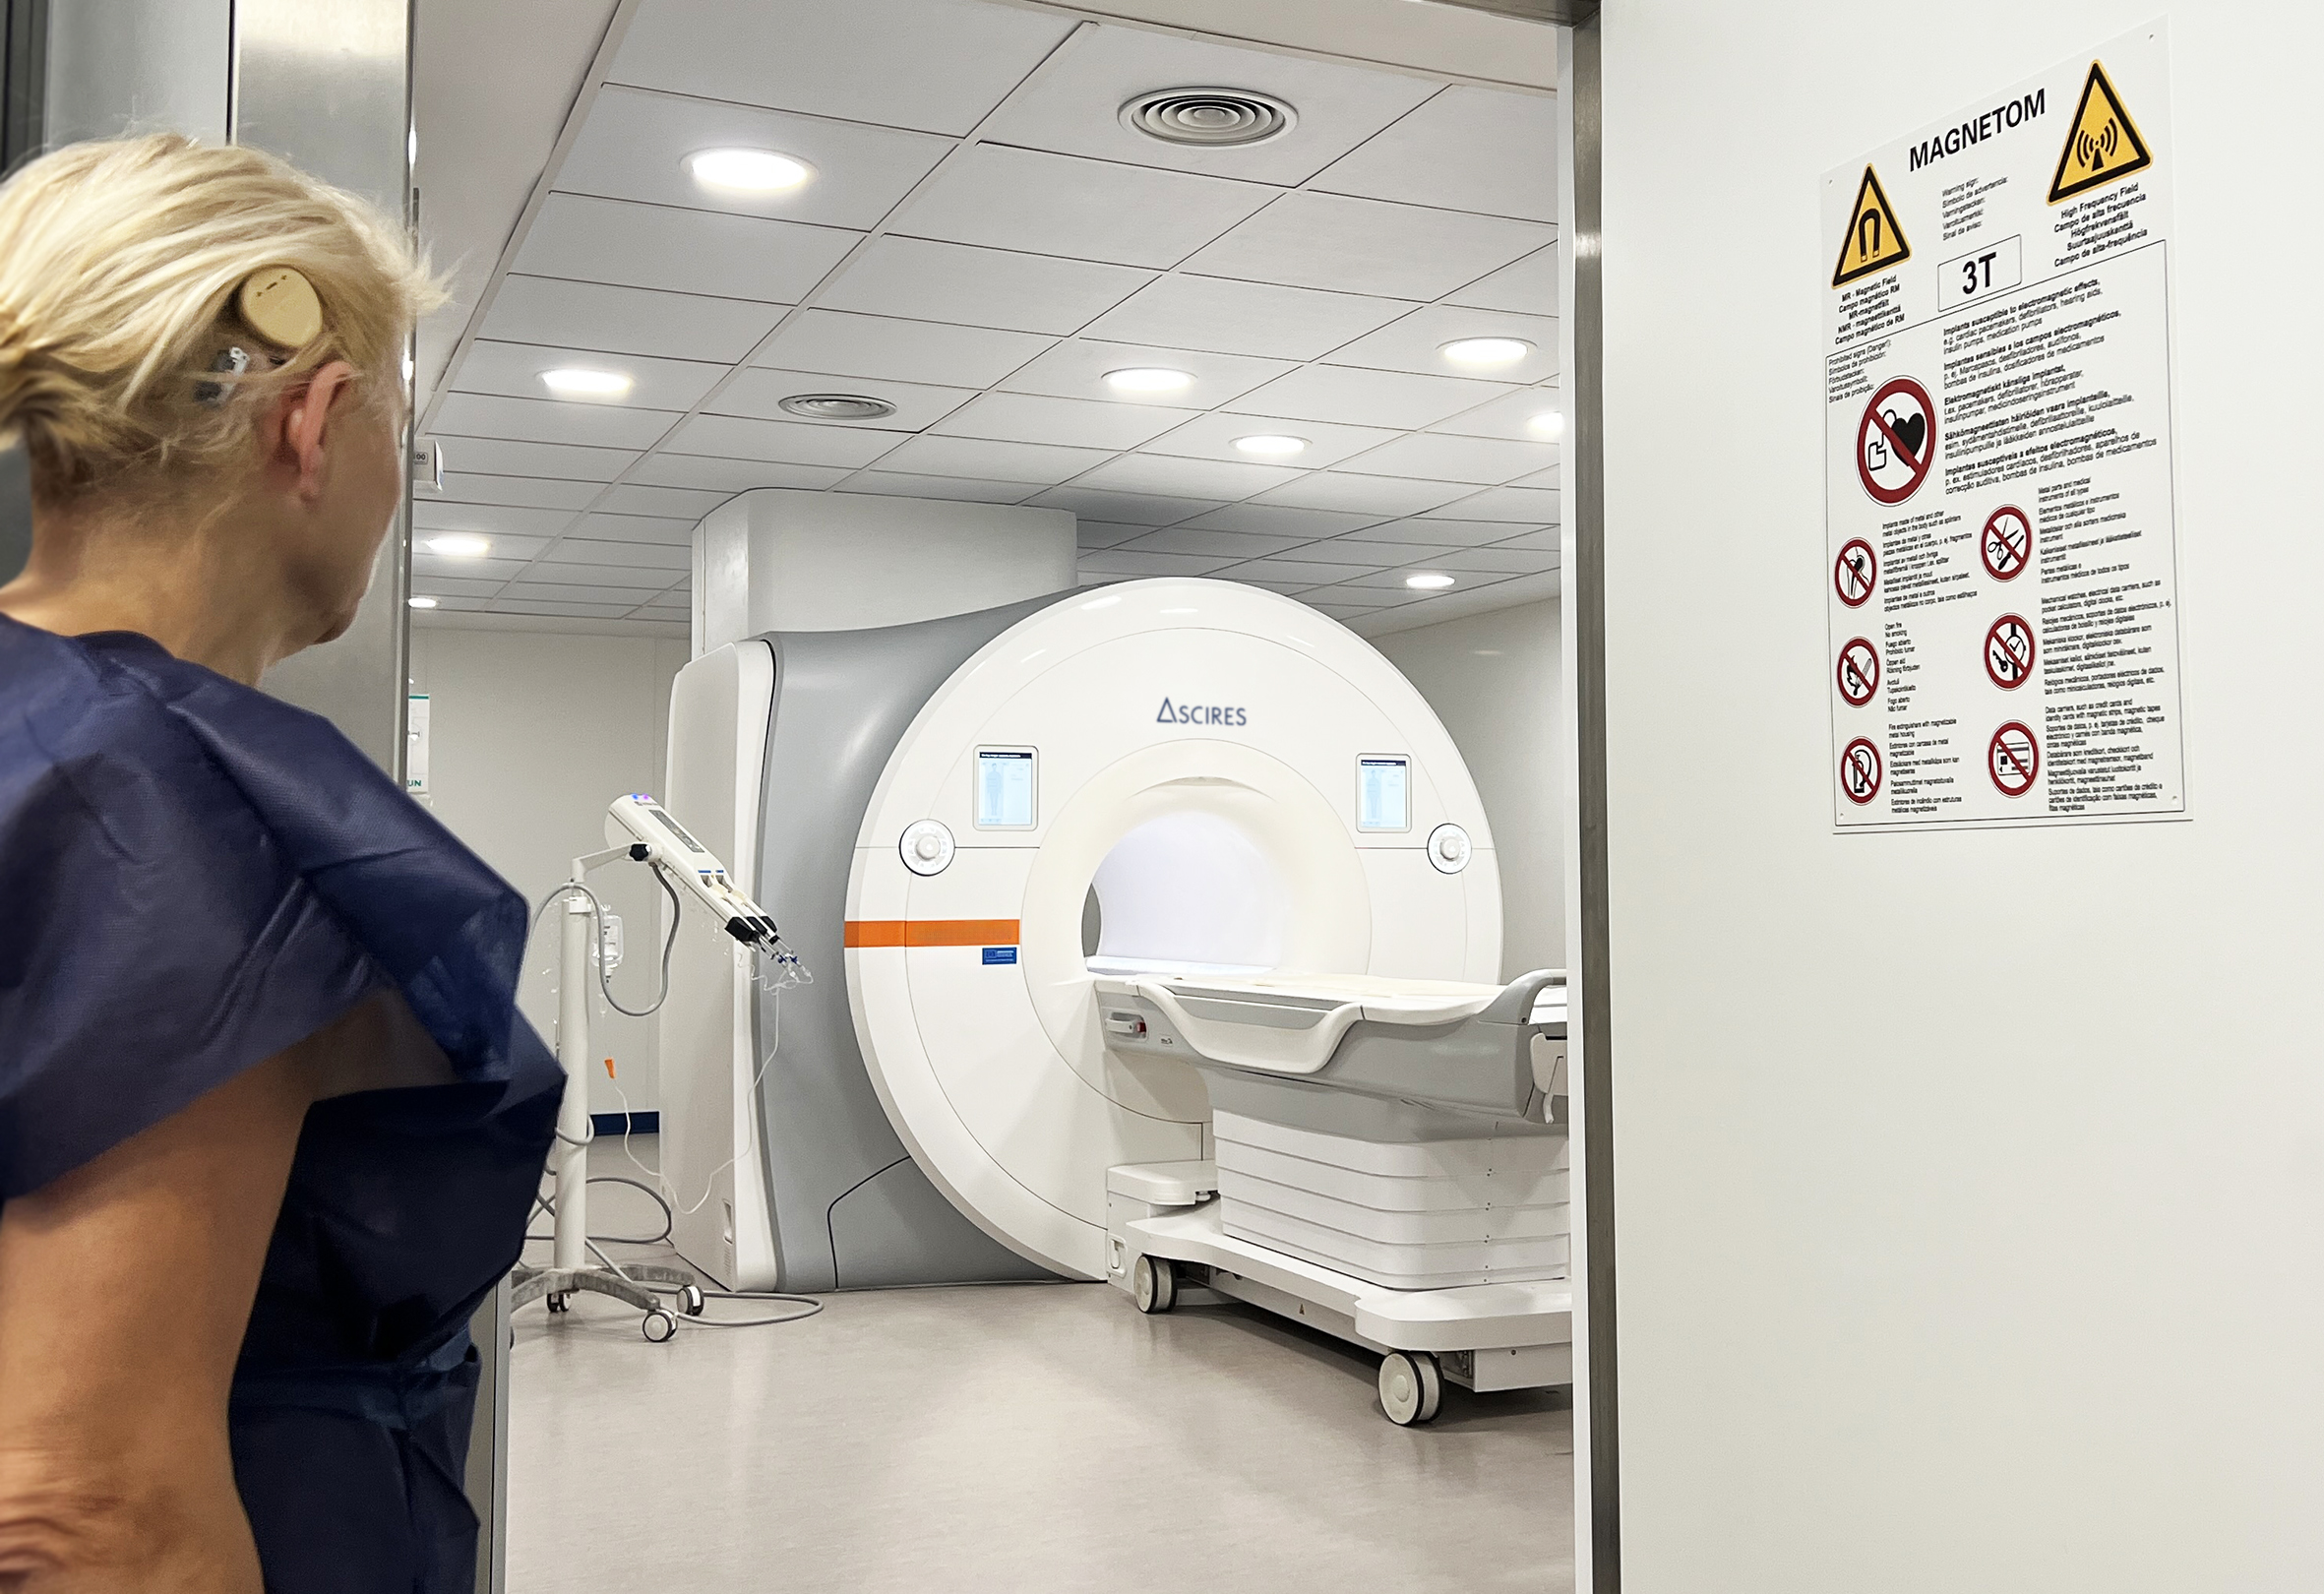 Ascires ha desarrollado un protocolo para facilitar resonancias magnéticas seguras a pacientes con dispositivos electrónicos e implantes metálicos.